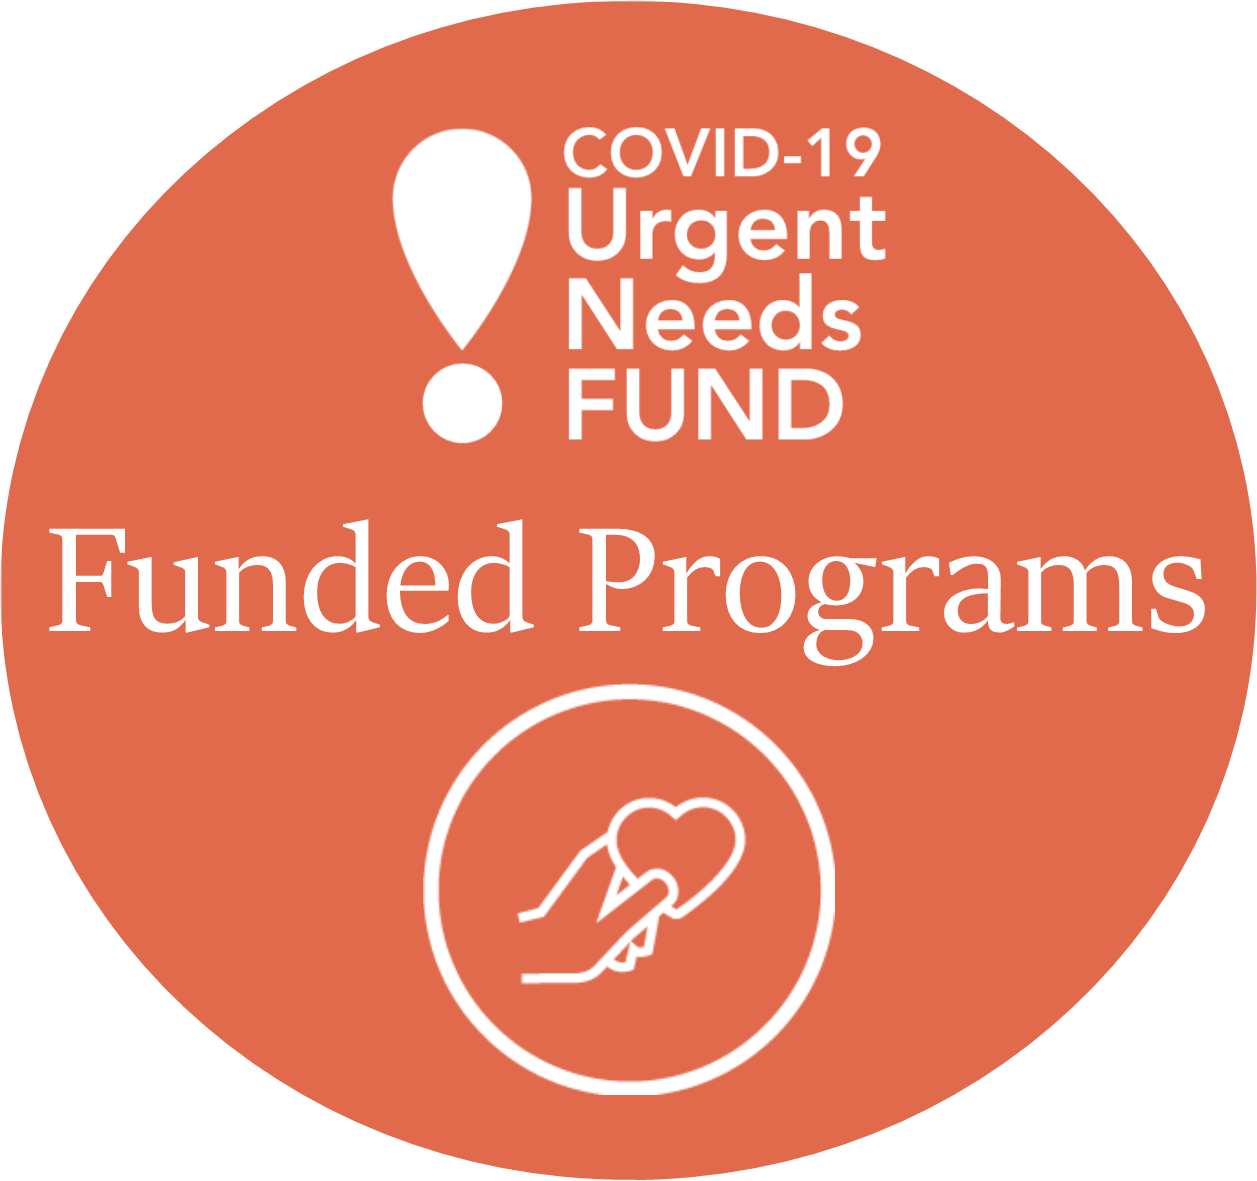 Urgent Needs Fund - Funded Programs